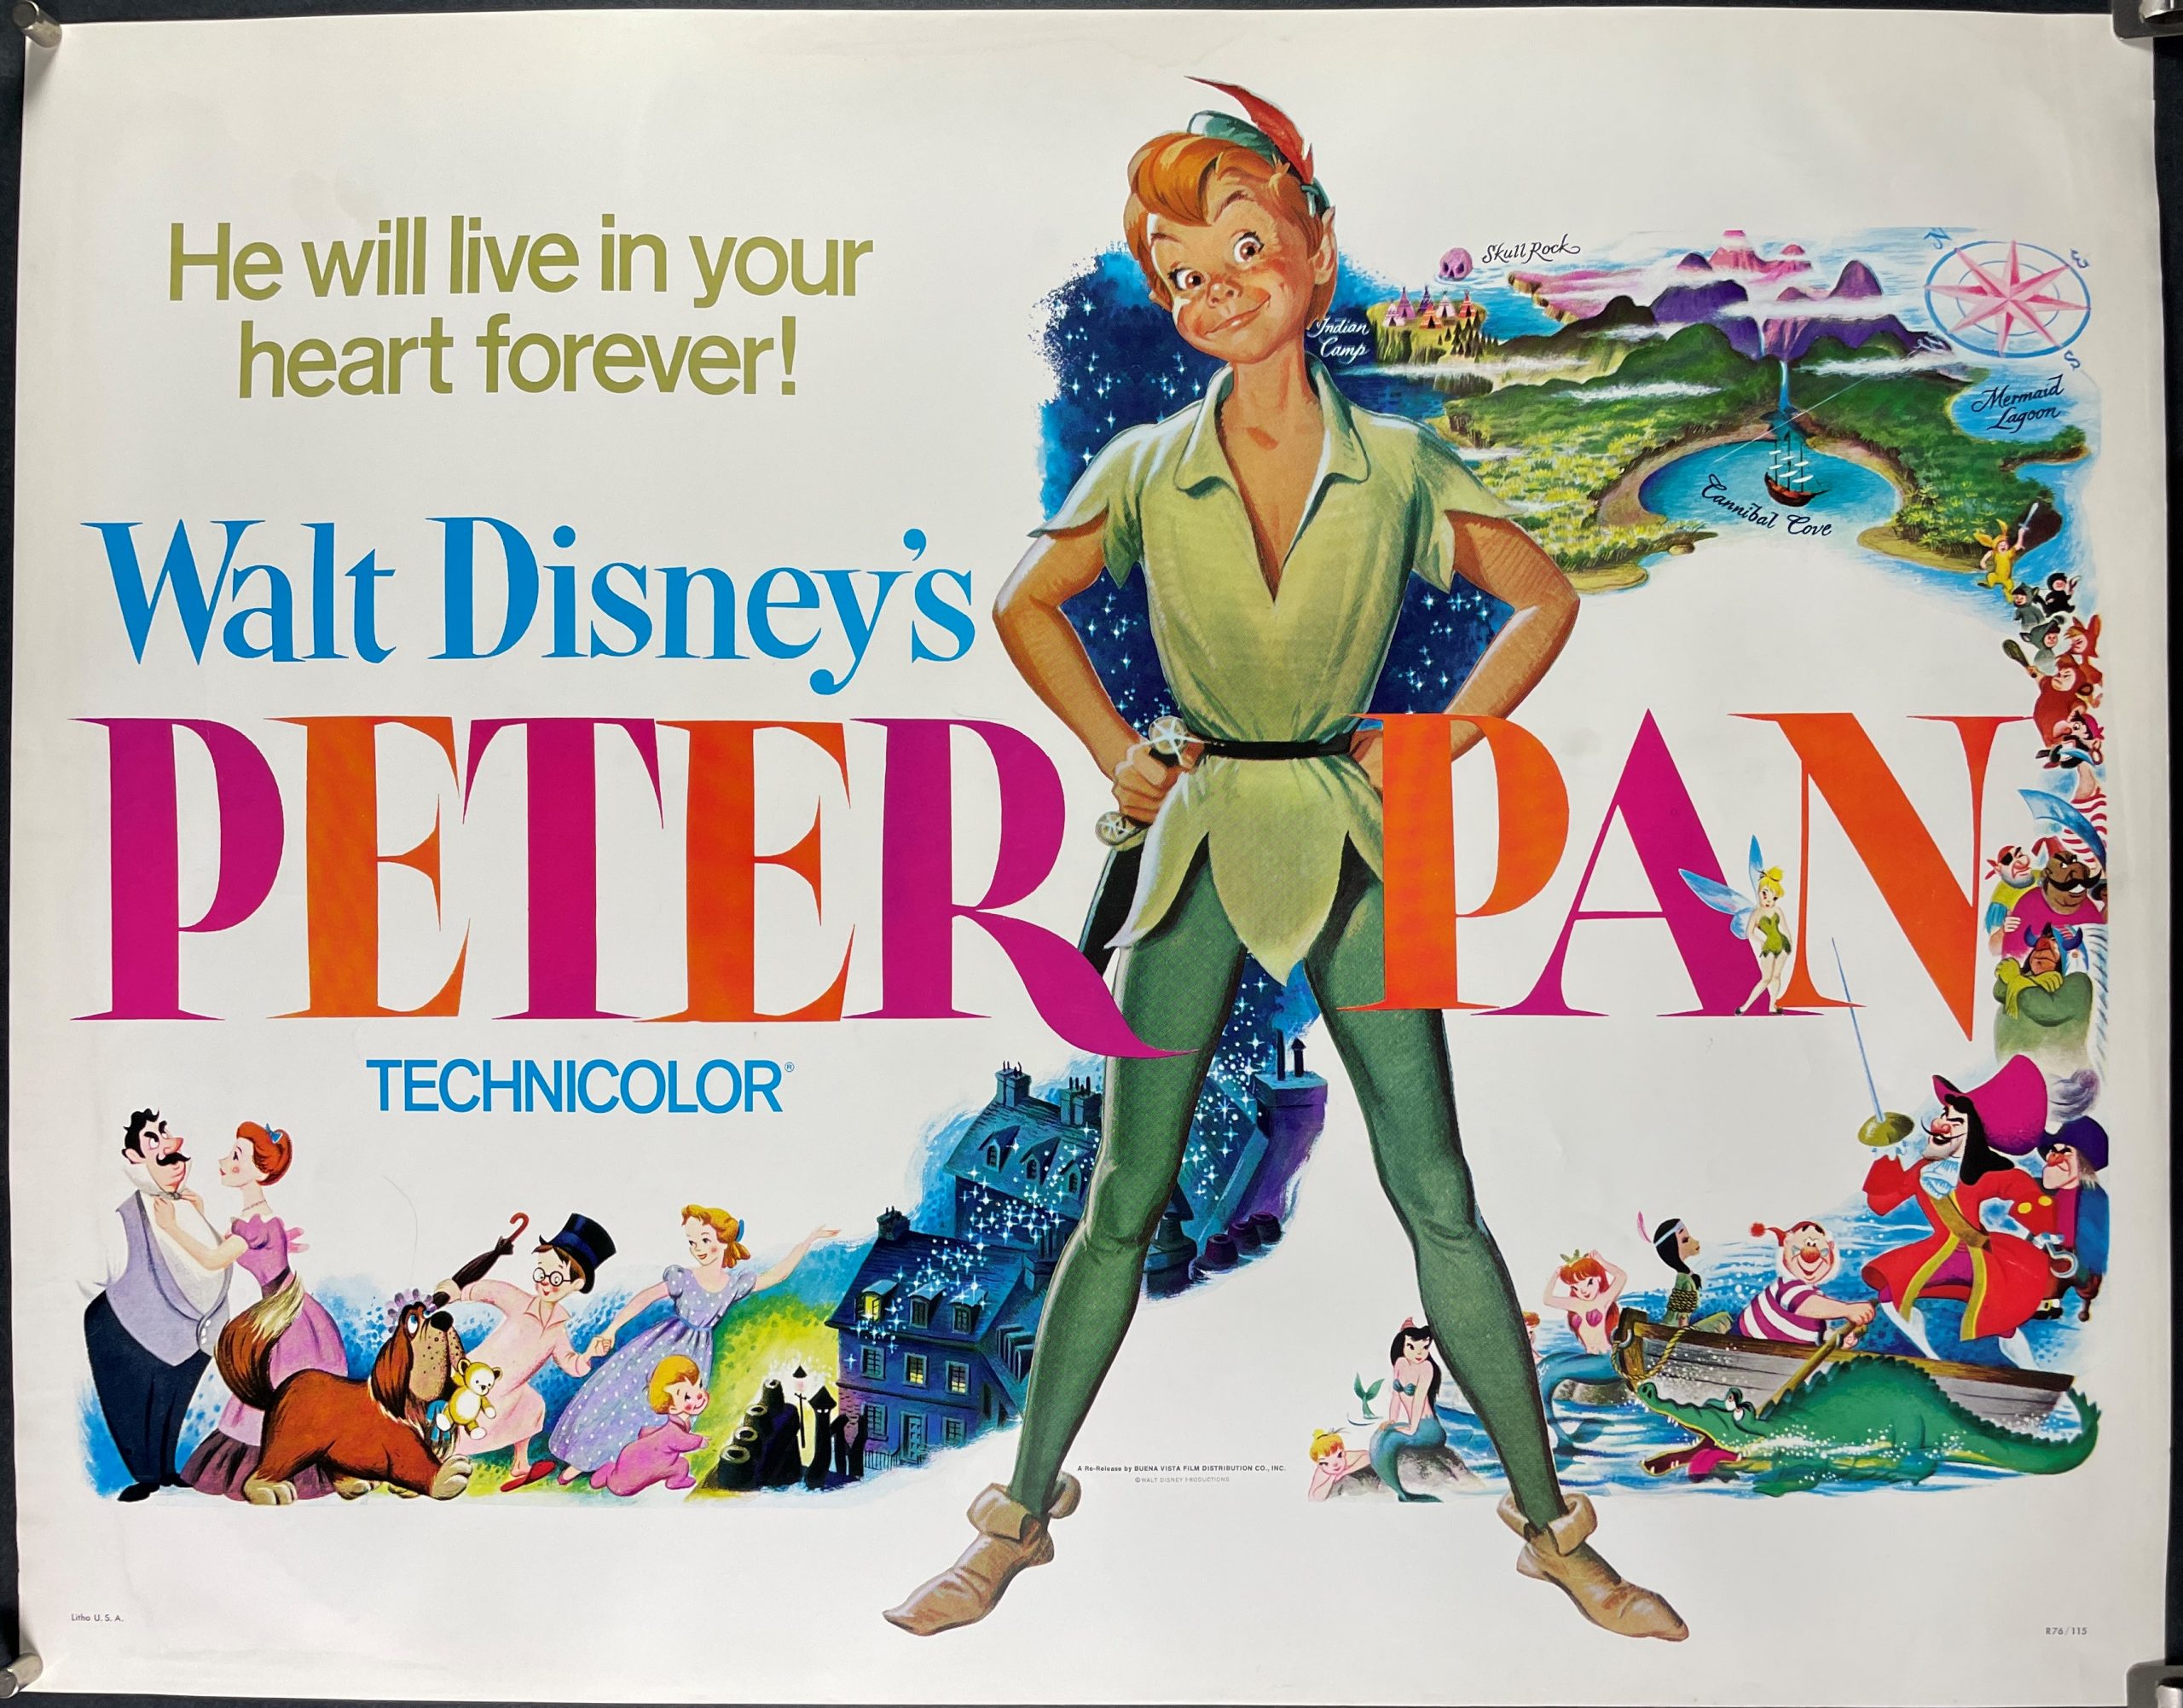 peter pan original poster